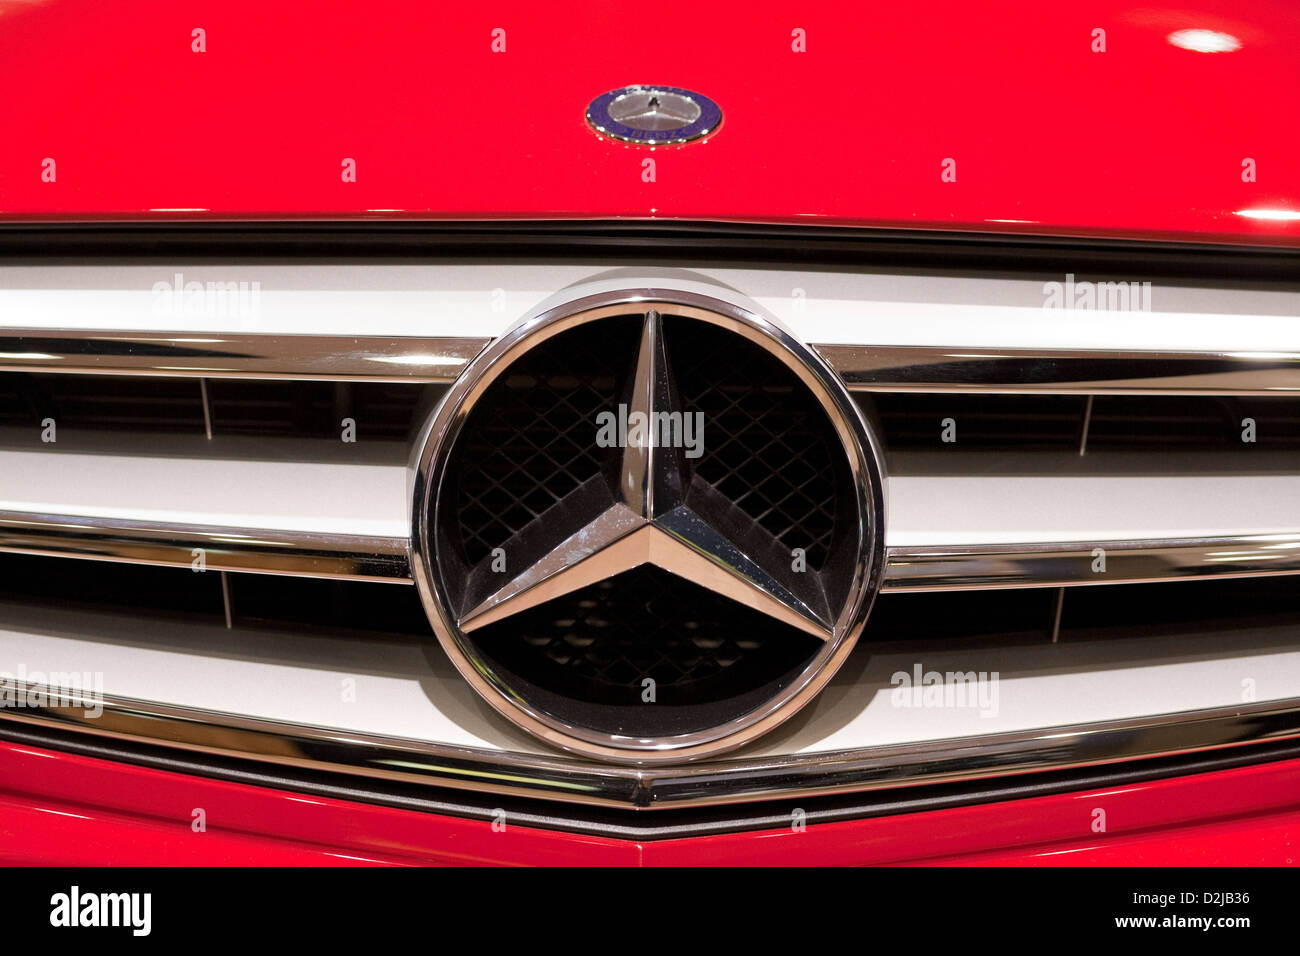 Mercedes-Benz logo on grill detail Stock Photo - Alamy